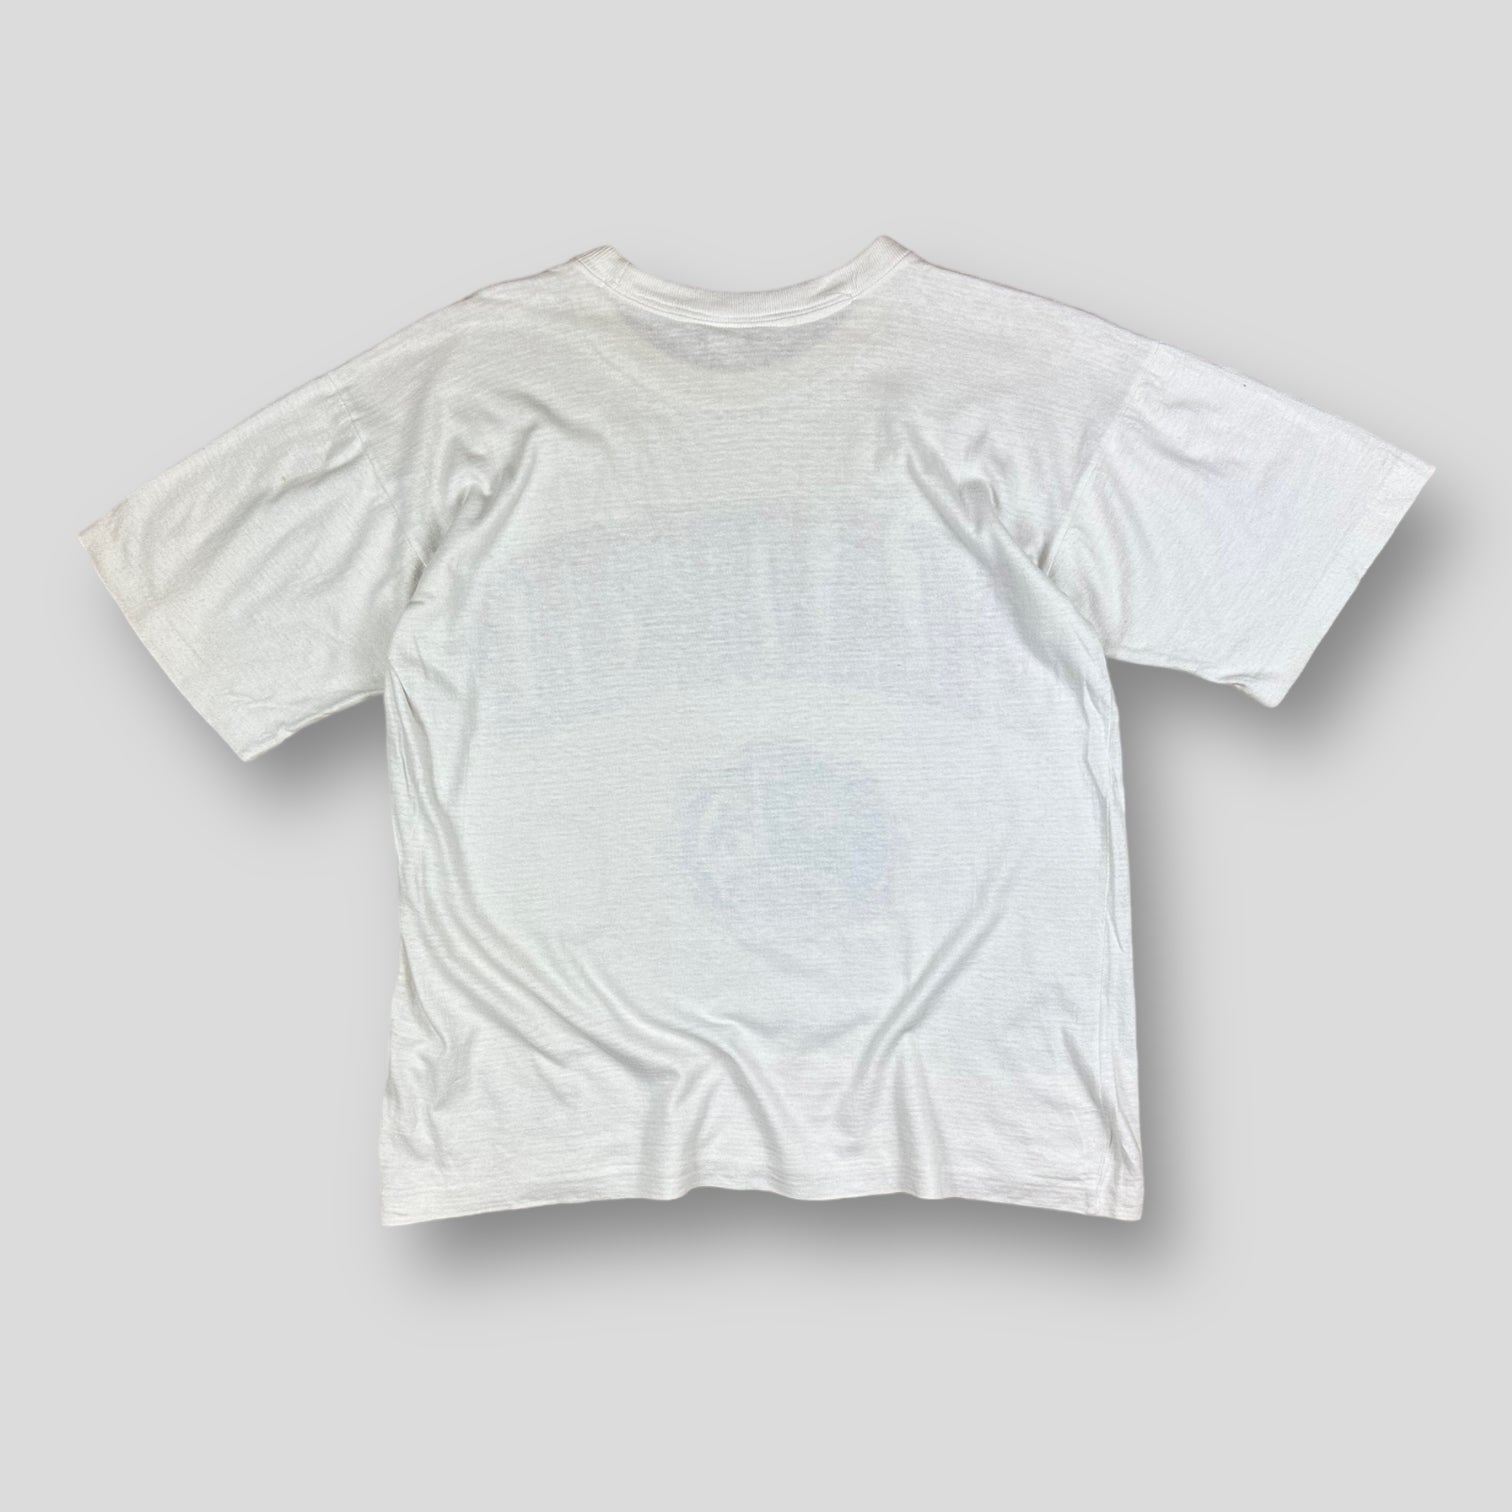 90s Graphic Printed T-shirt